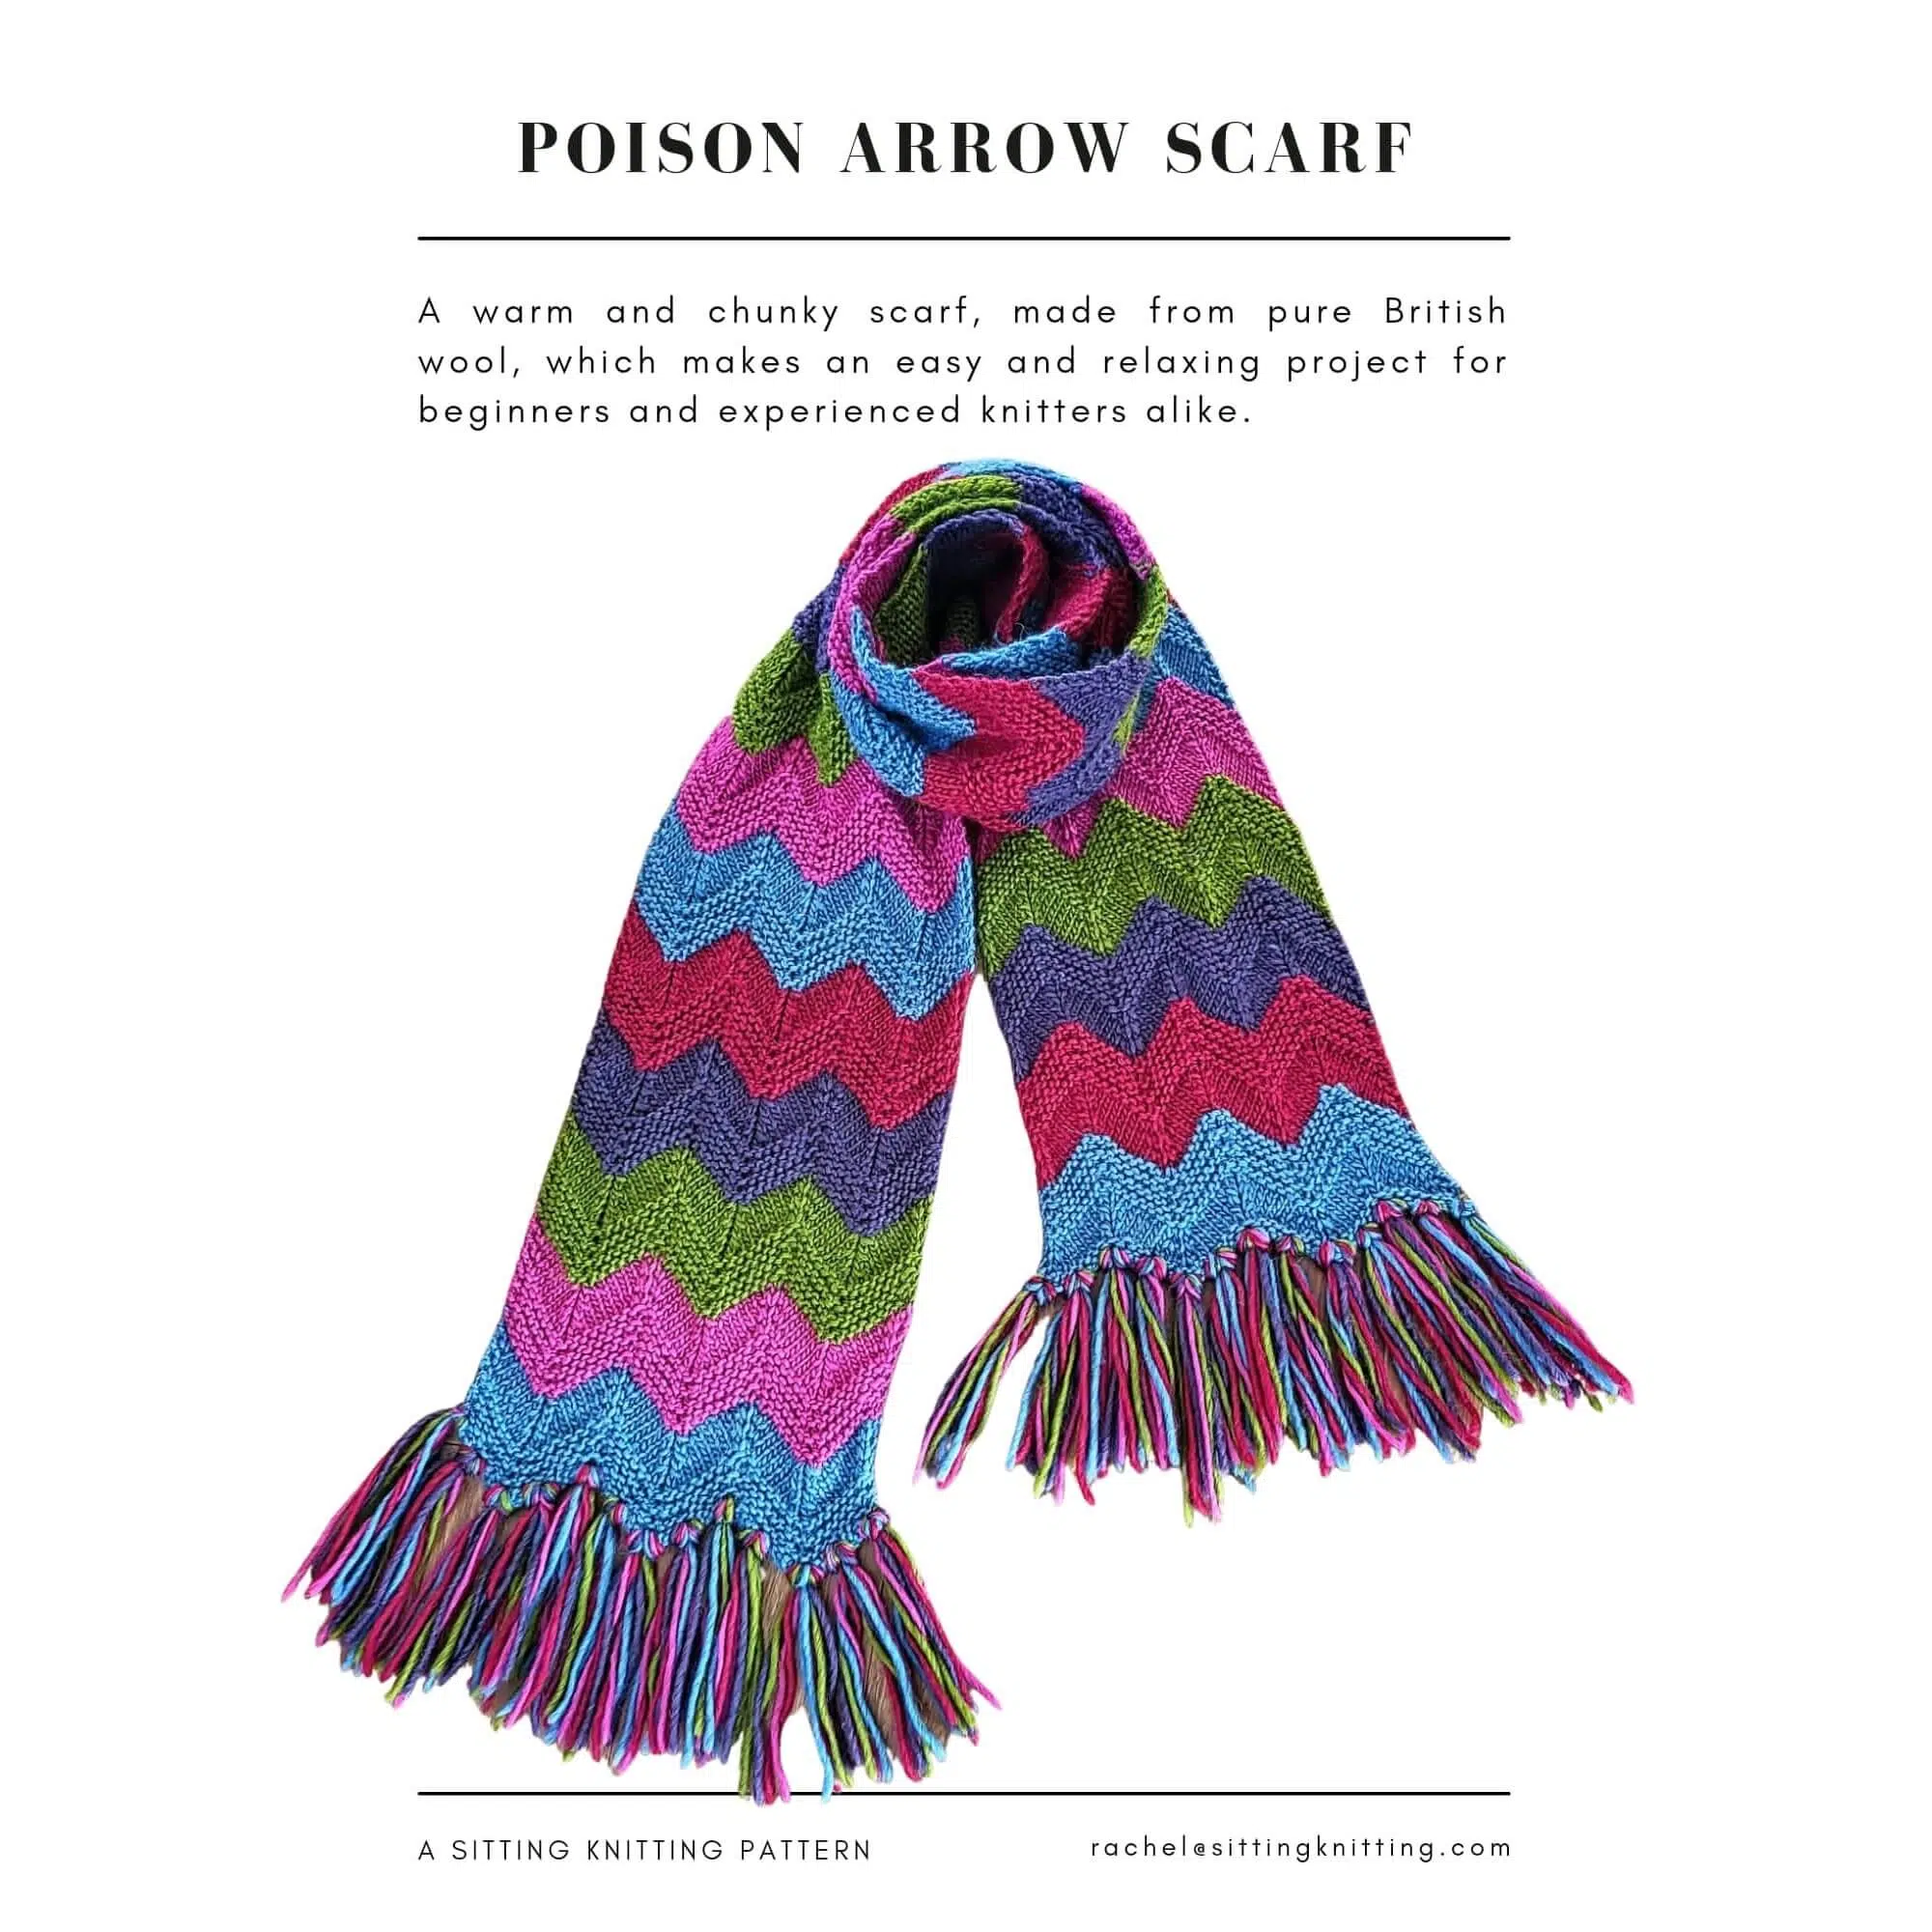 Sitting Knitting Pattern - Poison Arrow Scarf